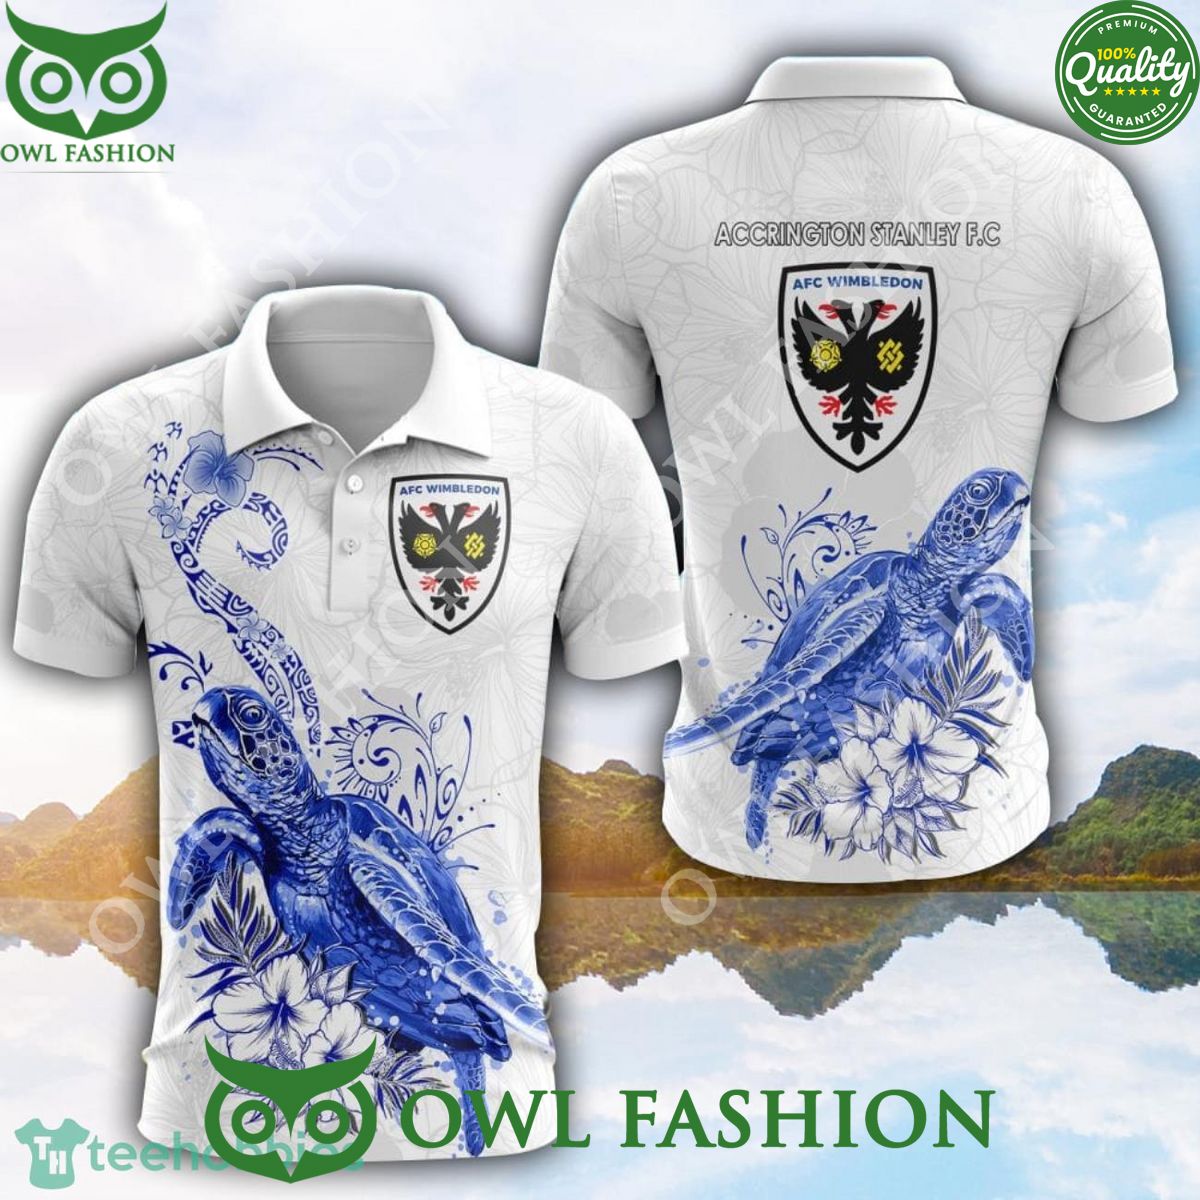 efl league one afc wimbledon turtle white golf polo shirt 1 eT1CC.jpg